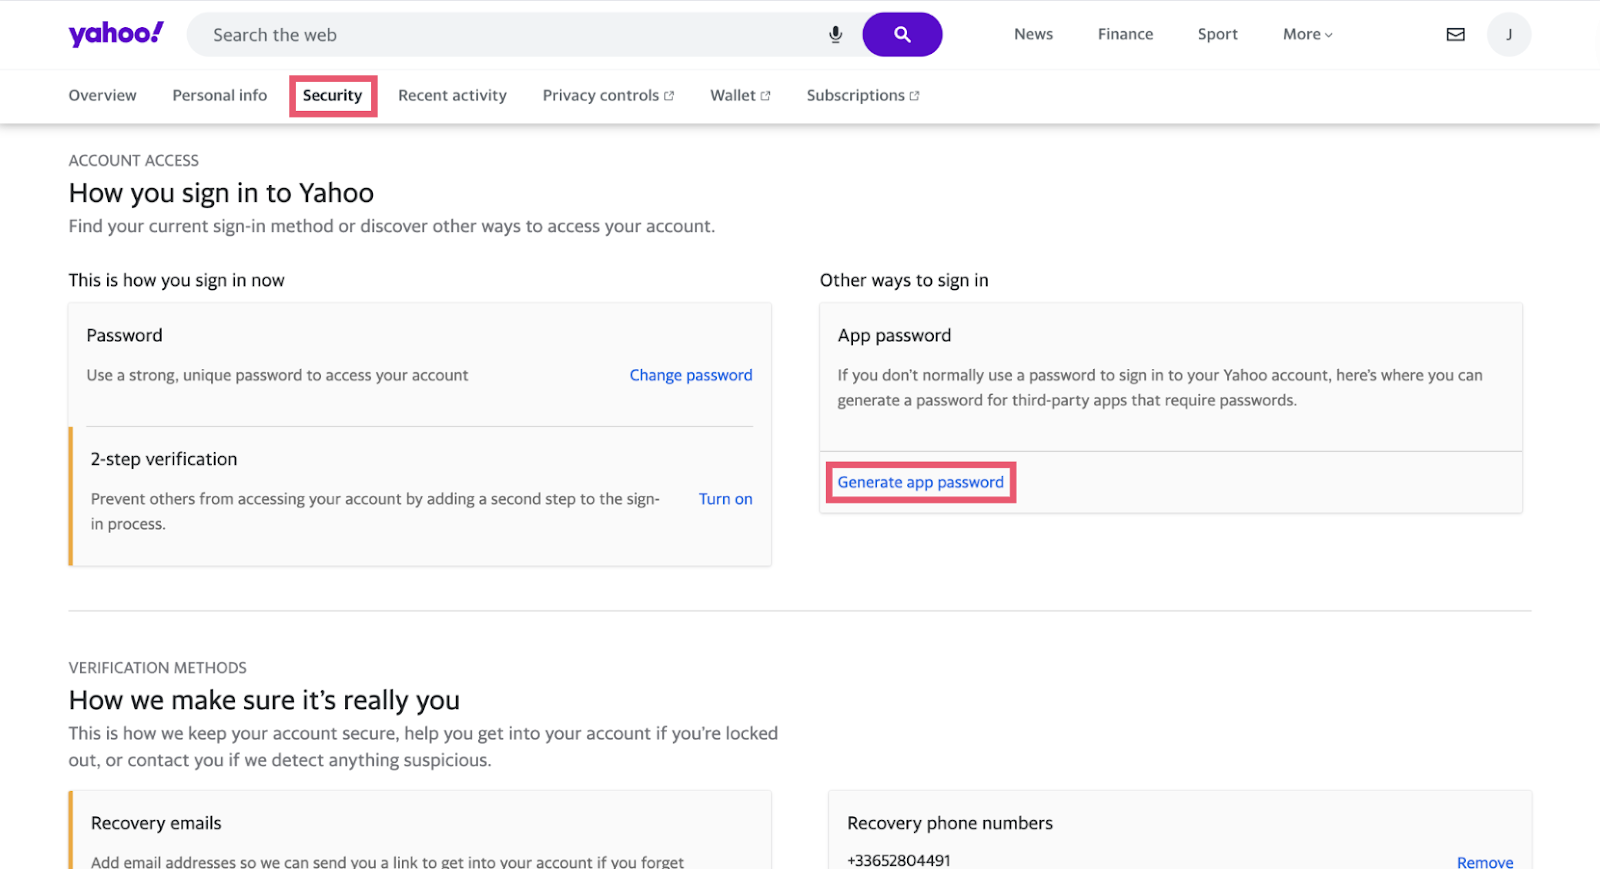 Yahoo Mail settings > Generate app password